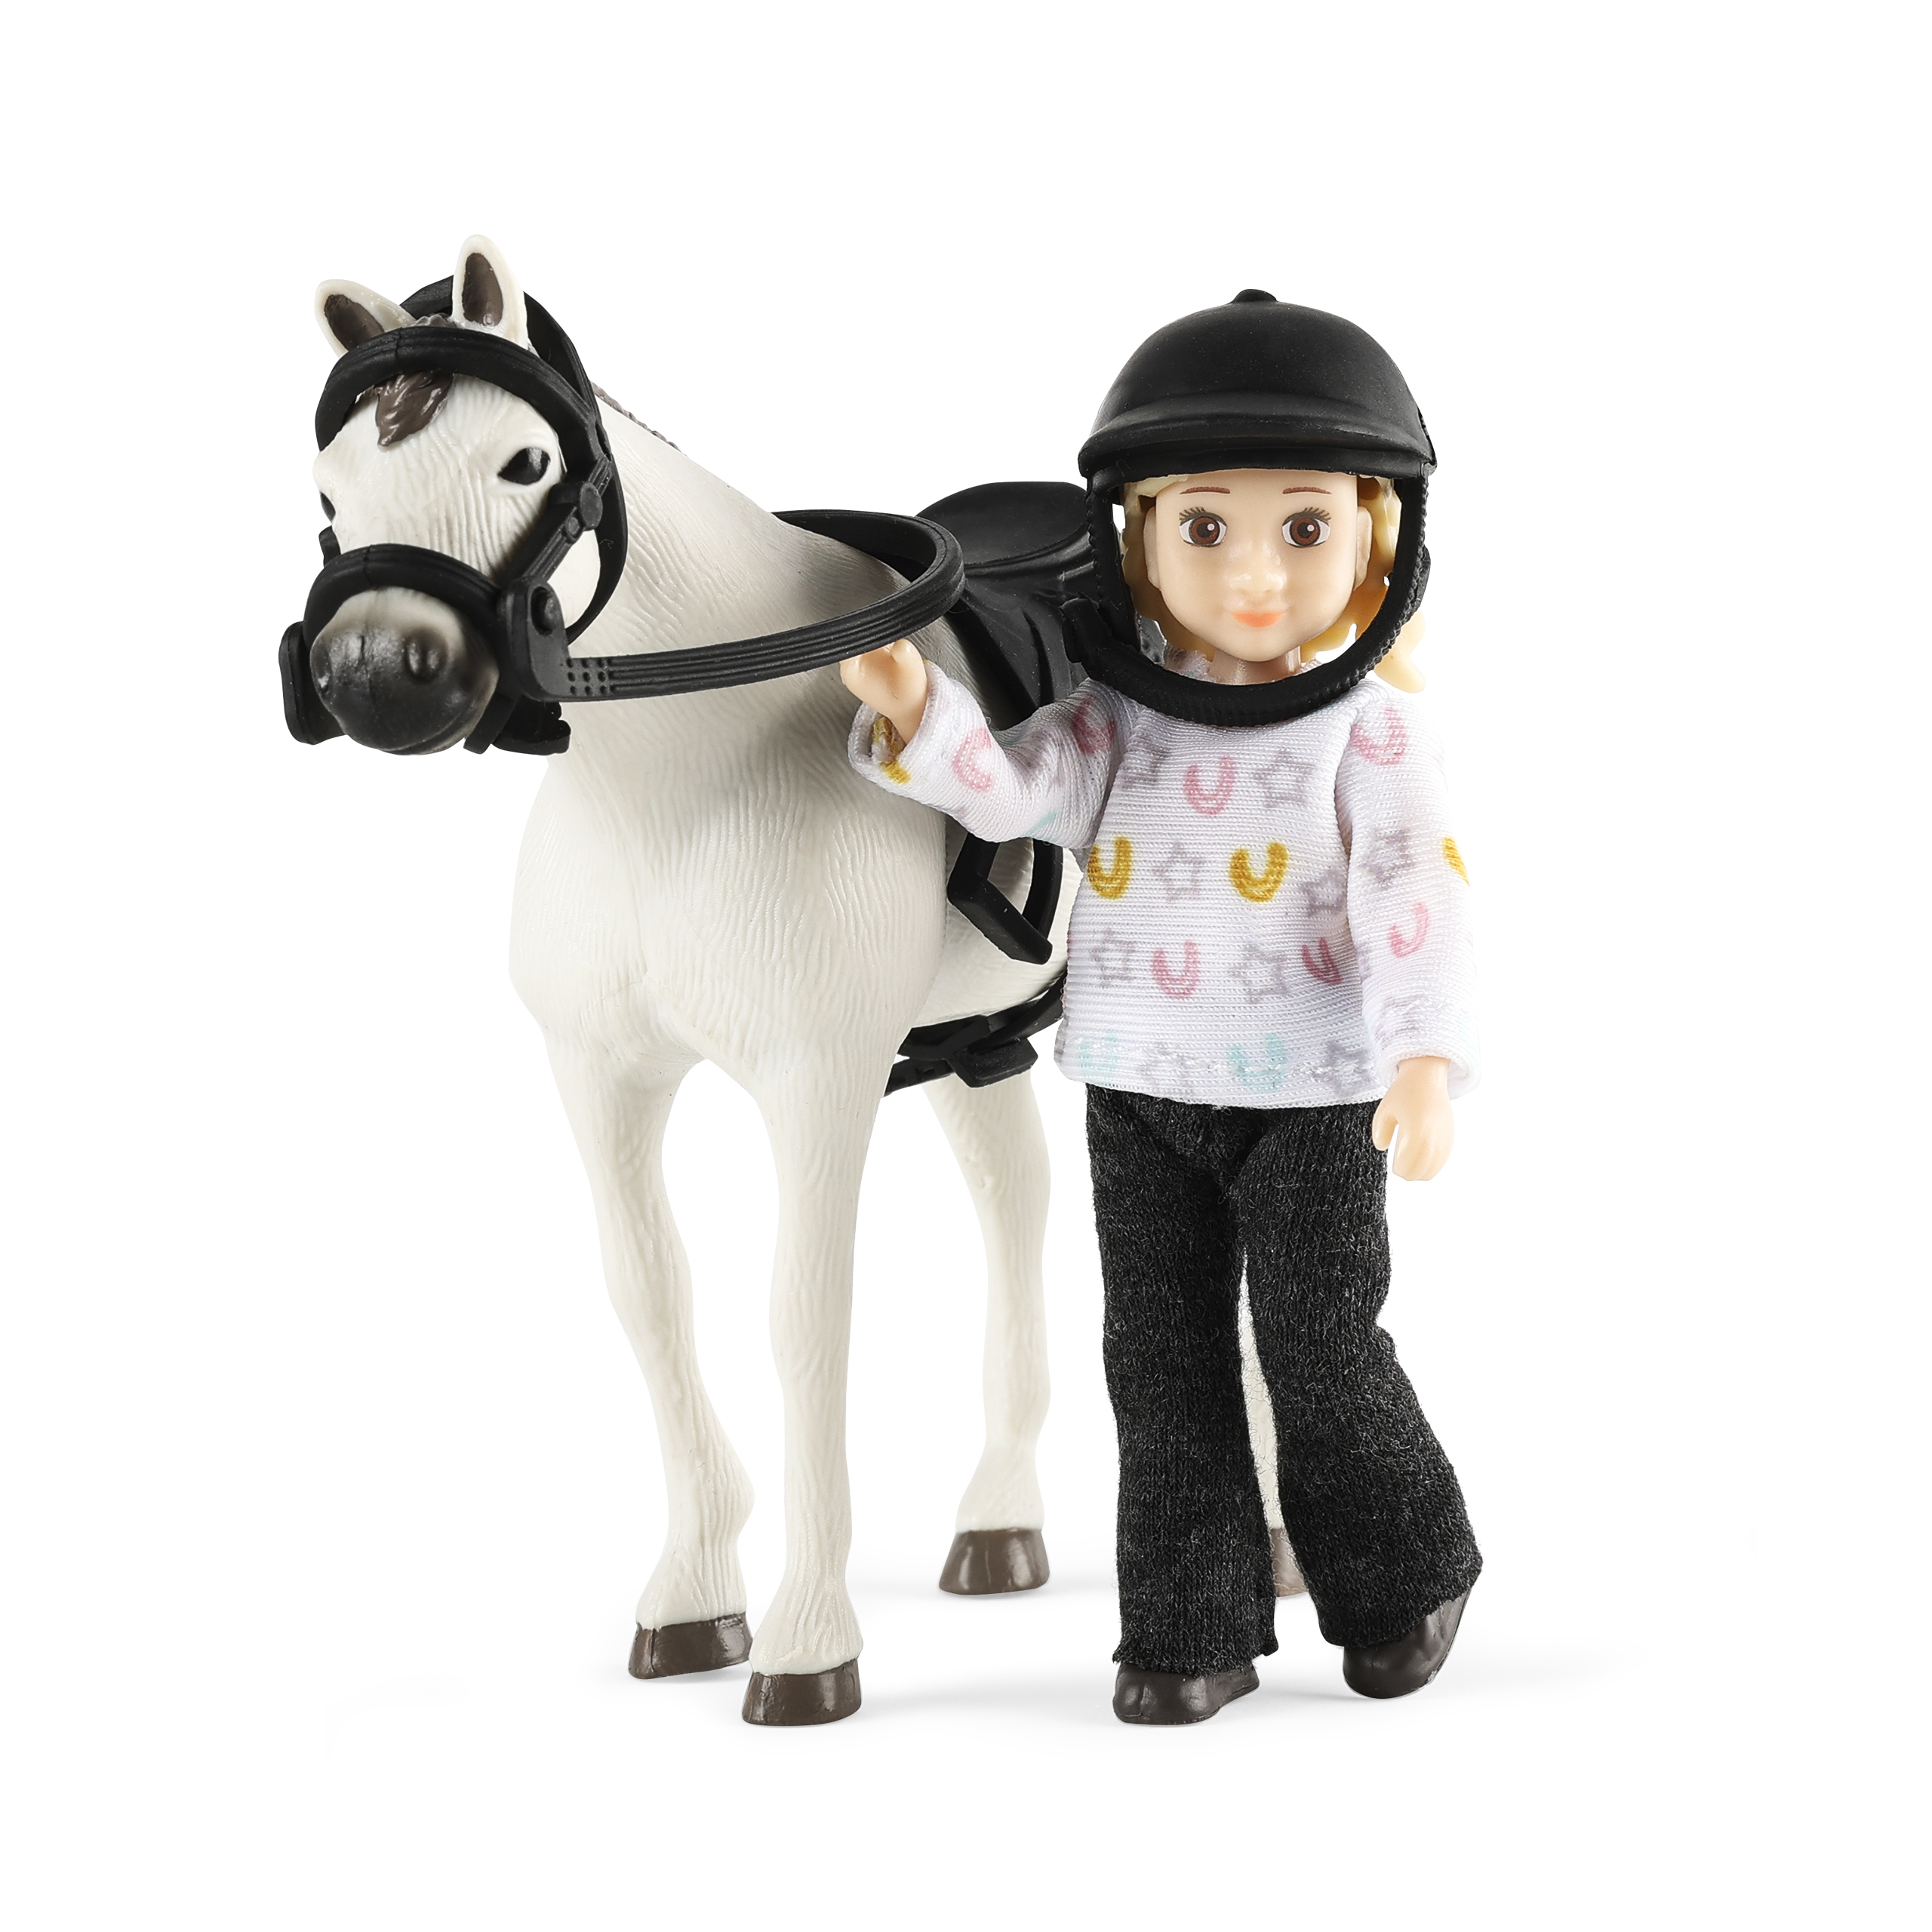 Dolls lundby	dollshouse doll with horse